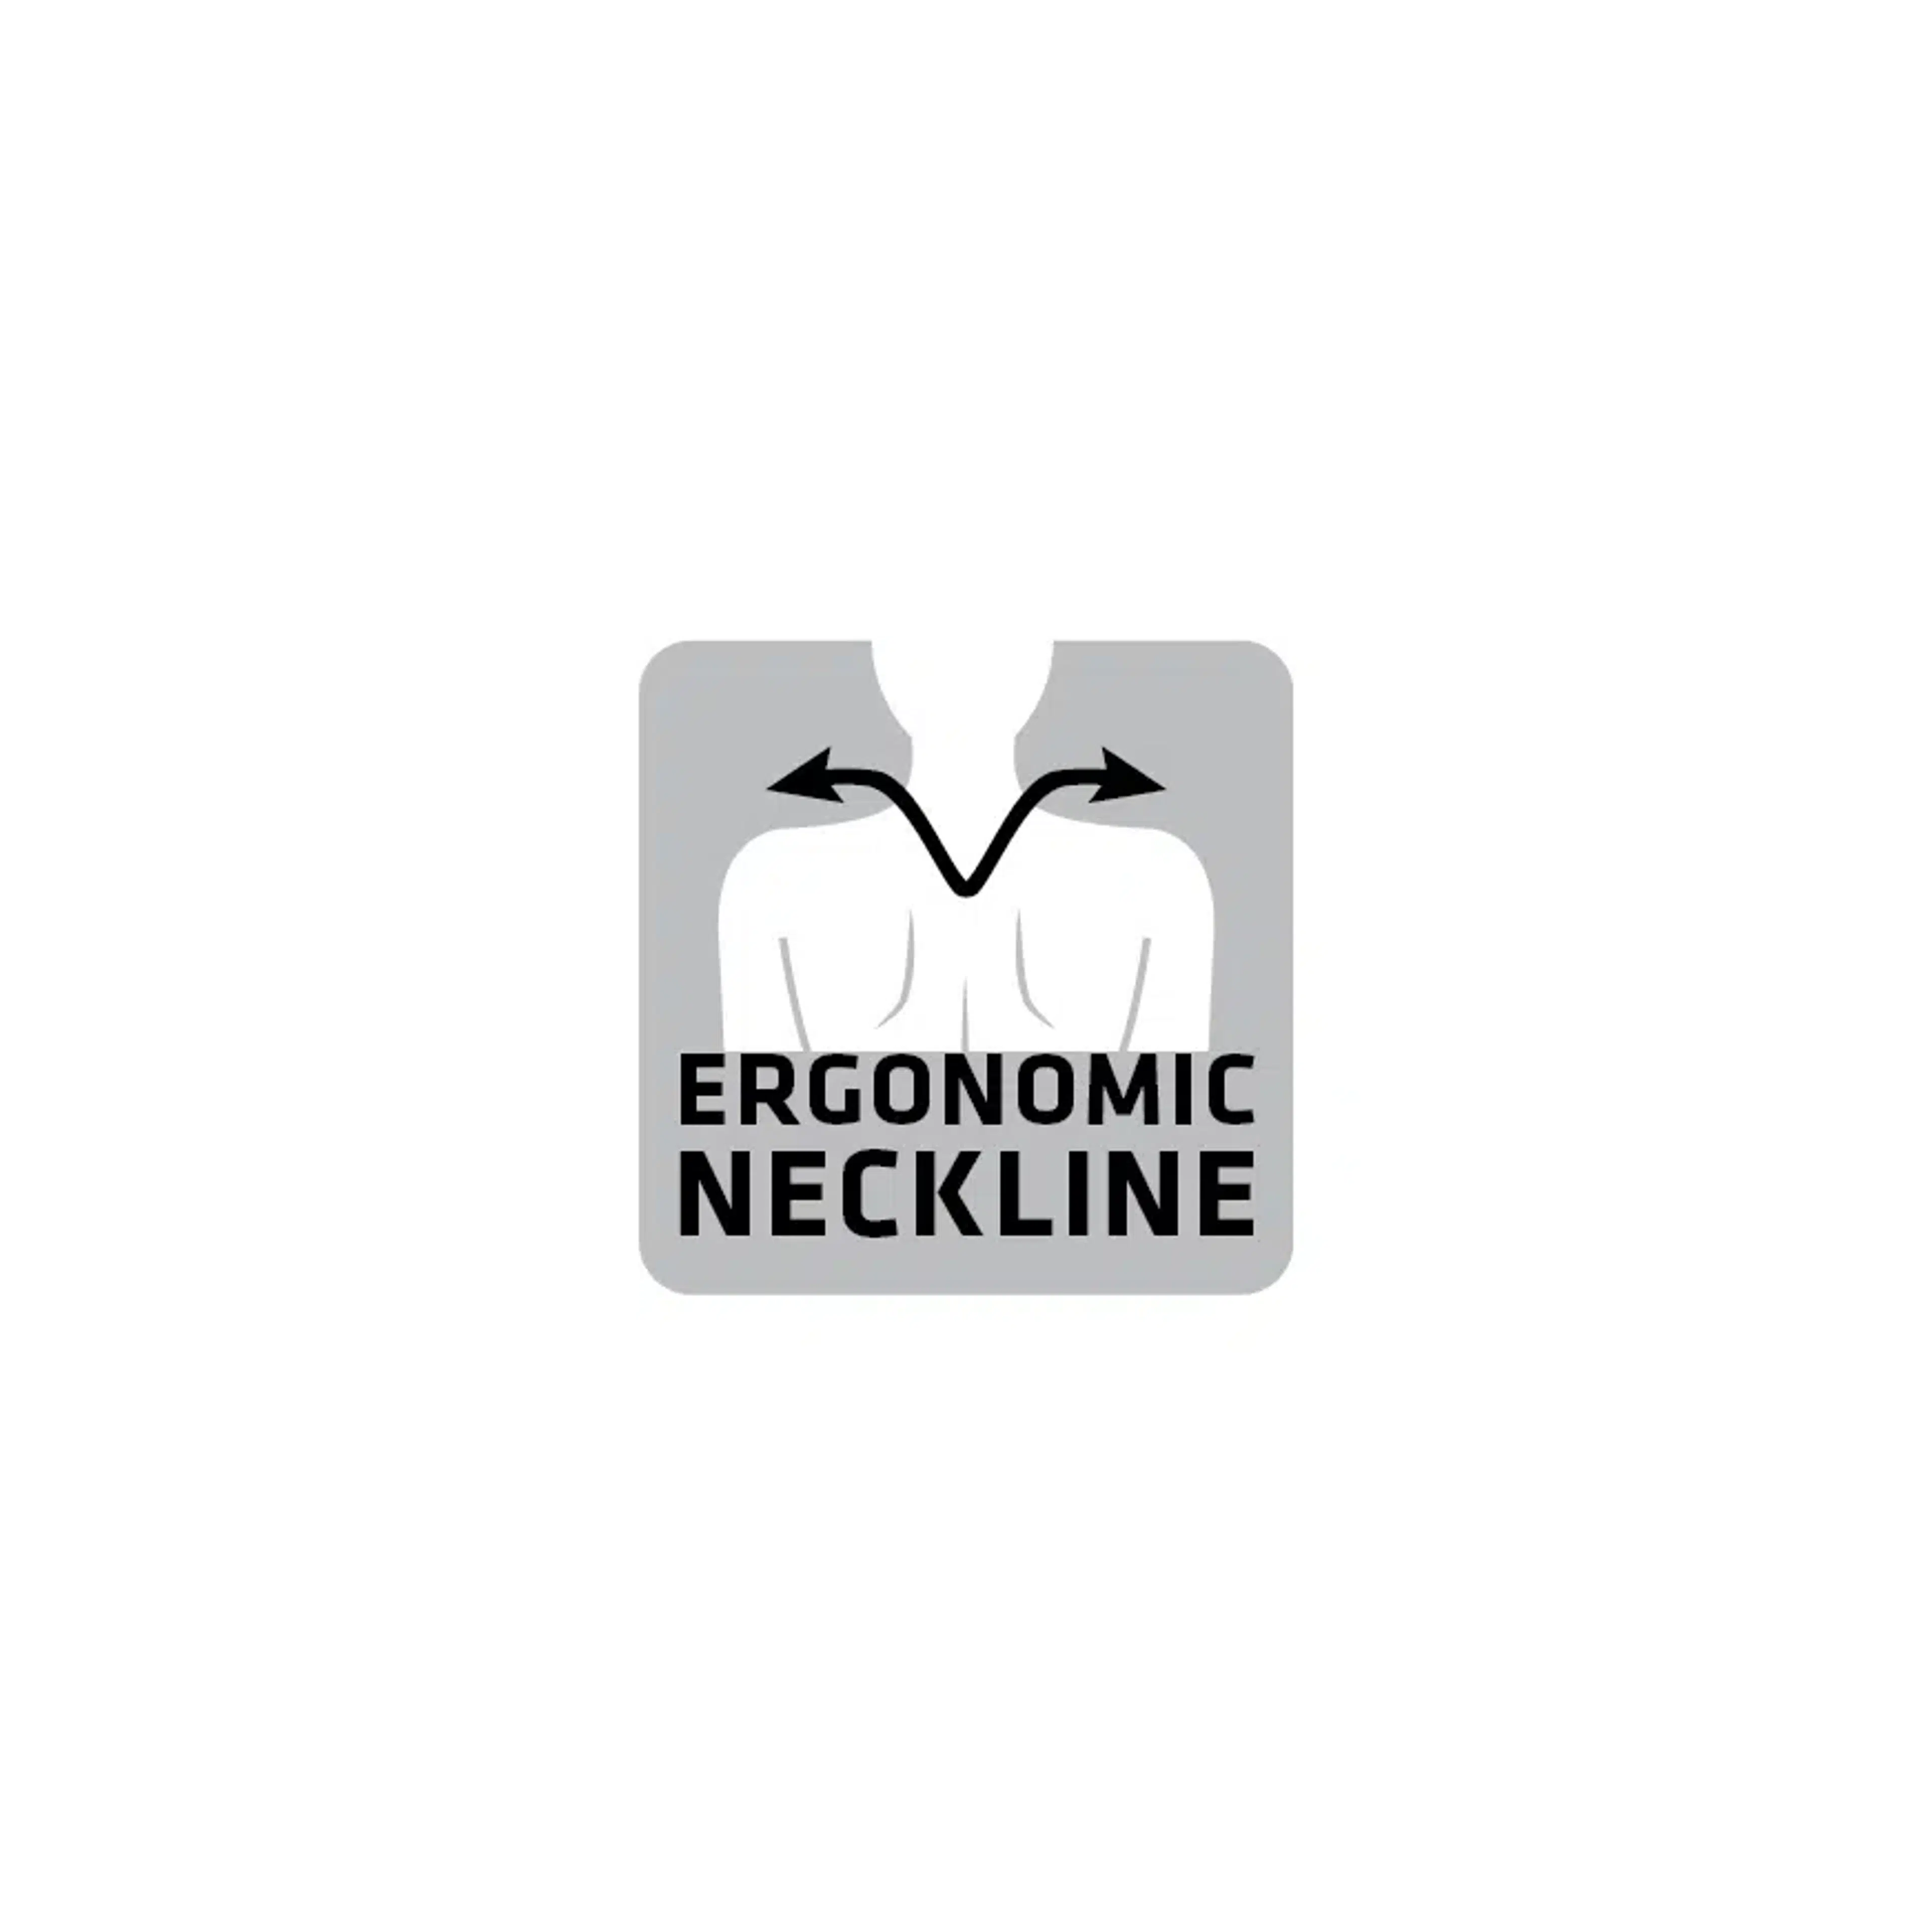 Ergonomic Neckline